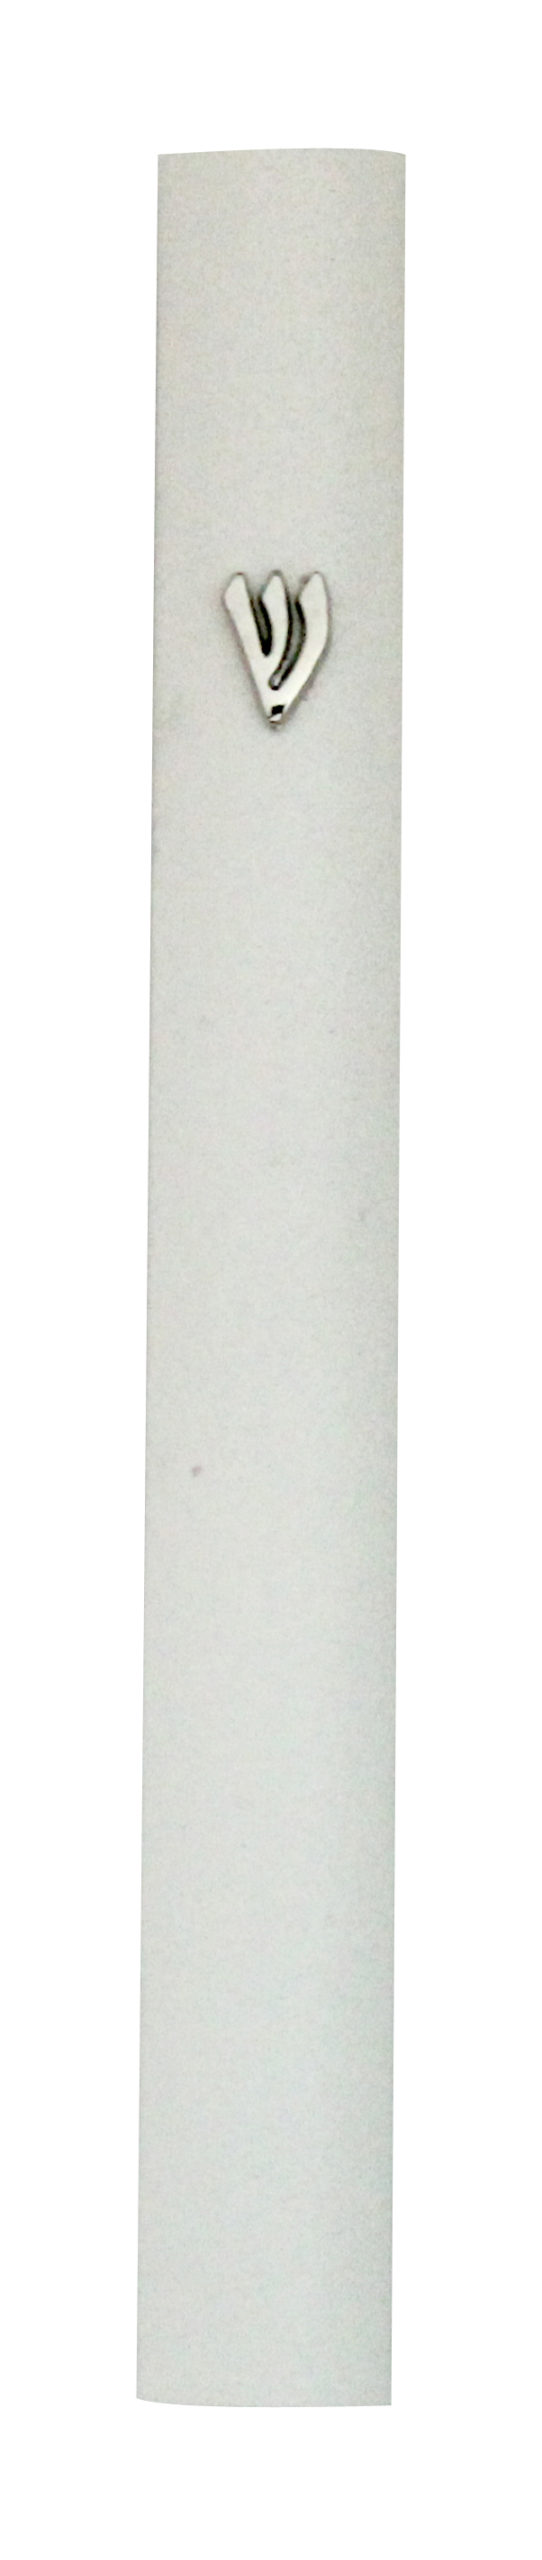 Aluminum Mezuzah 12cm- Matte White with Metal "Shin"